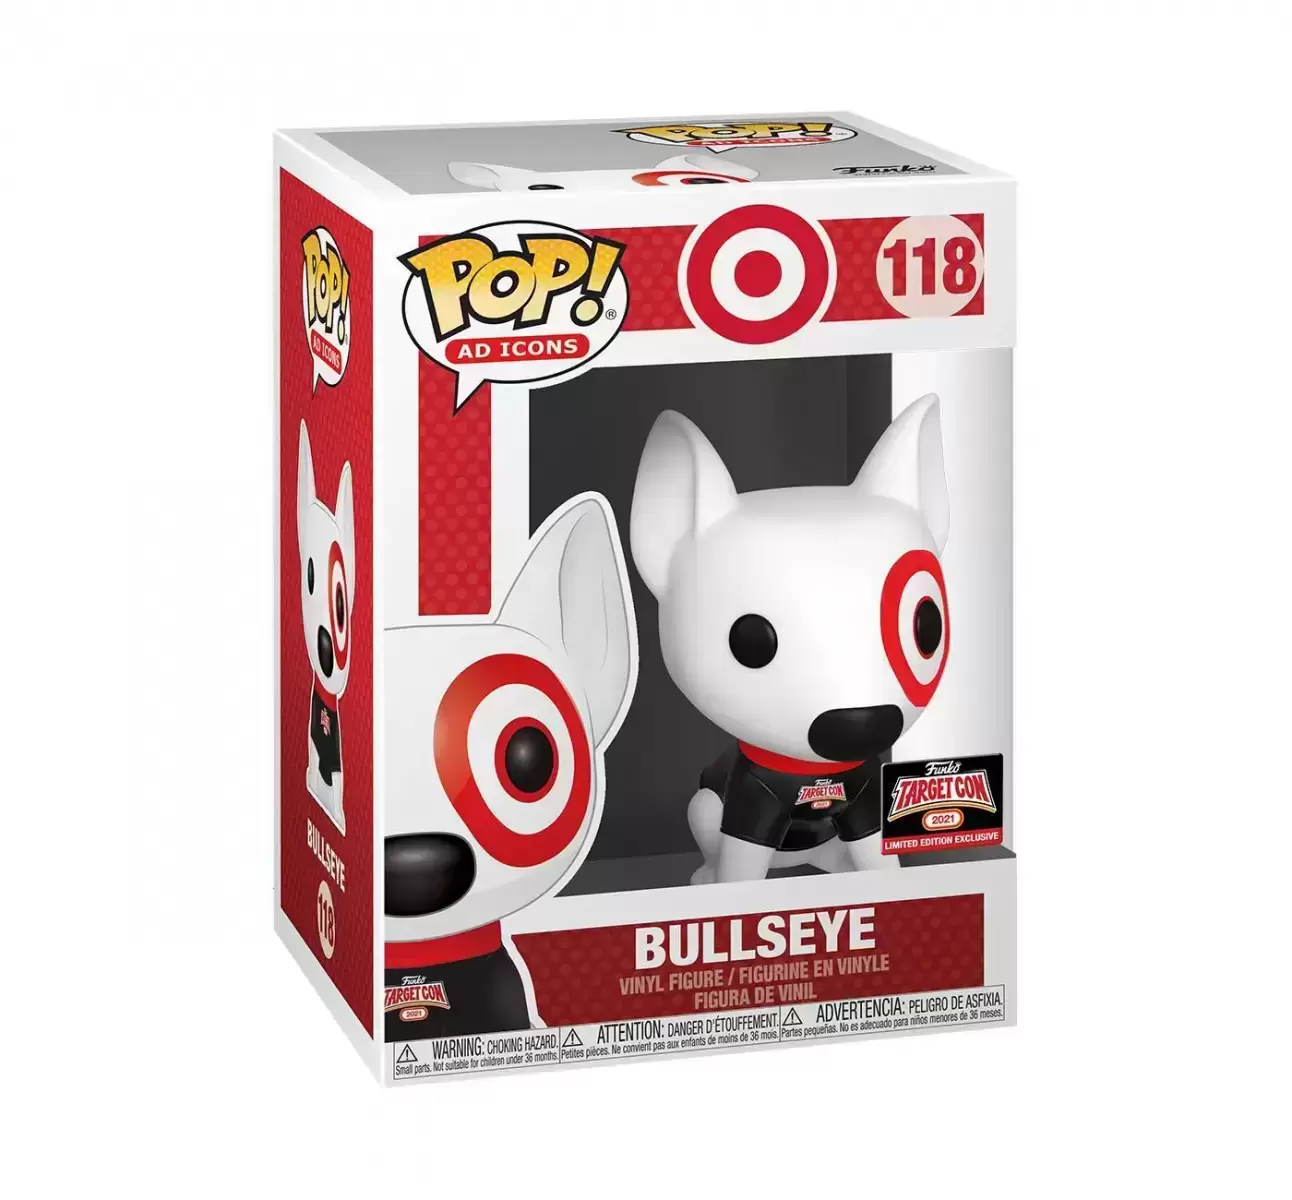 POP! Ad Icons - Bullseye - Bullseye